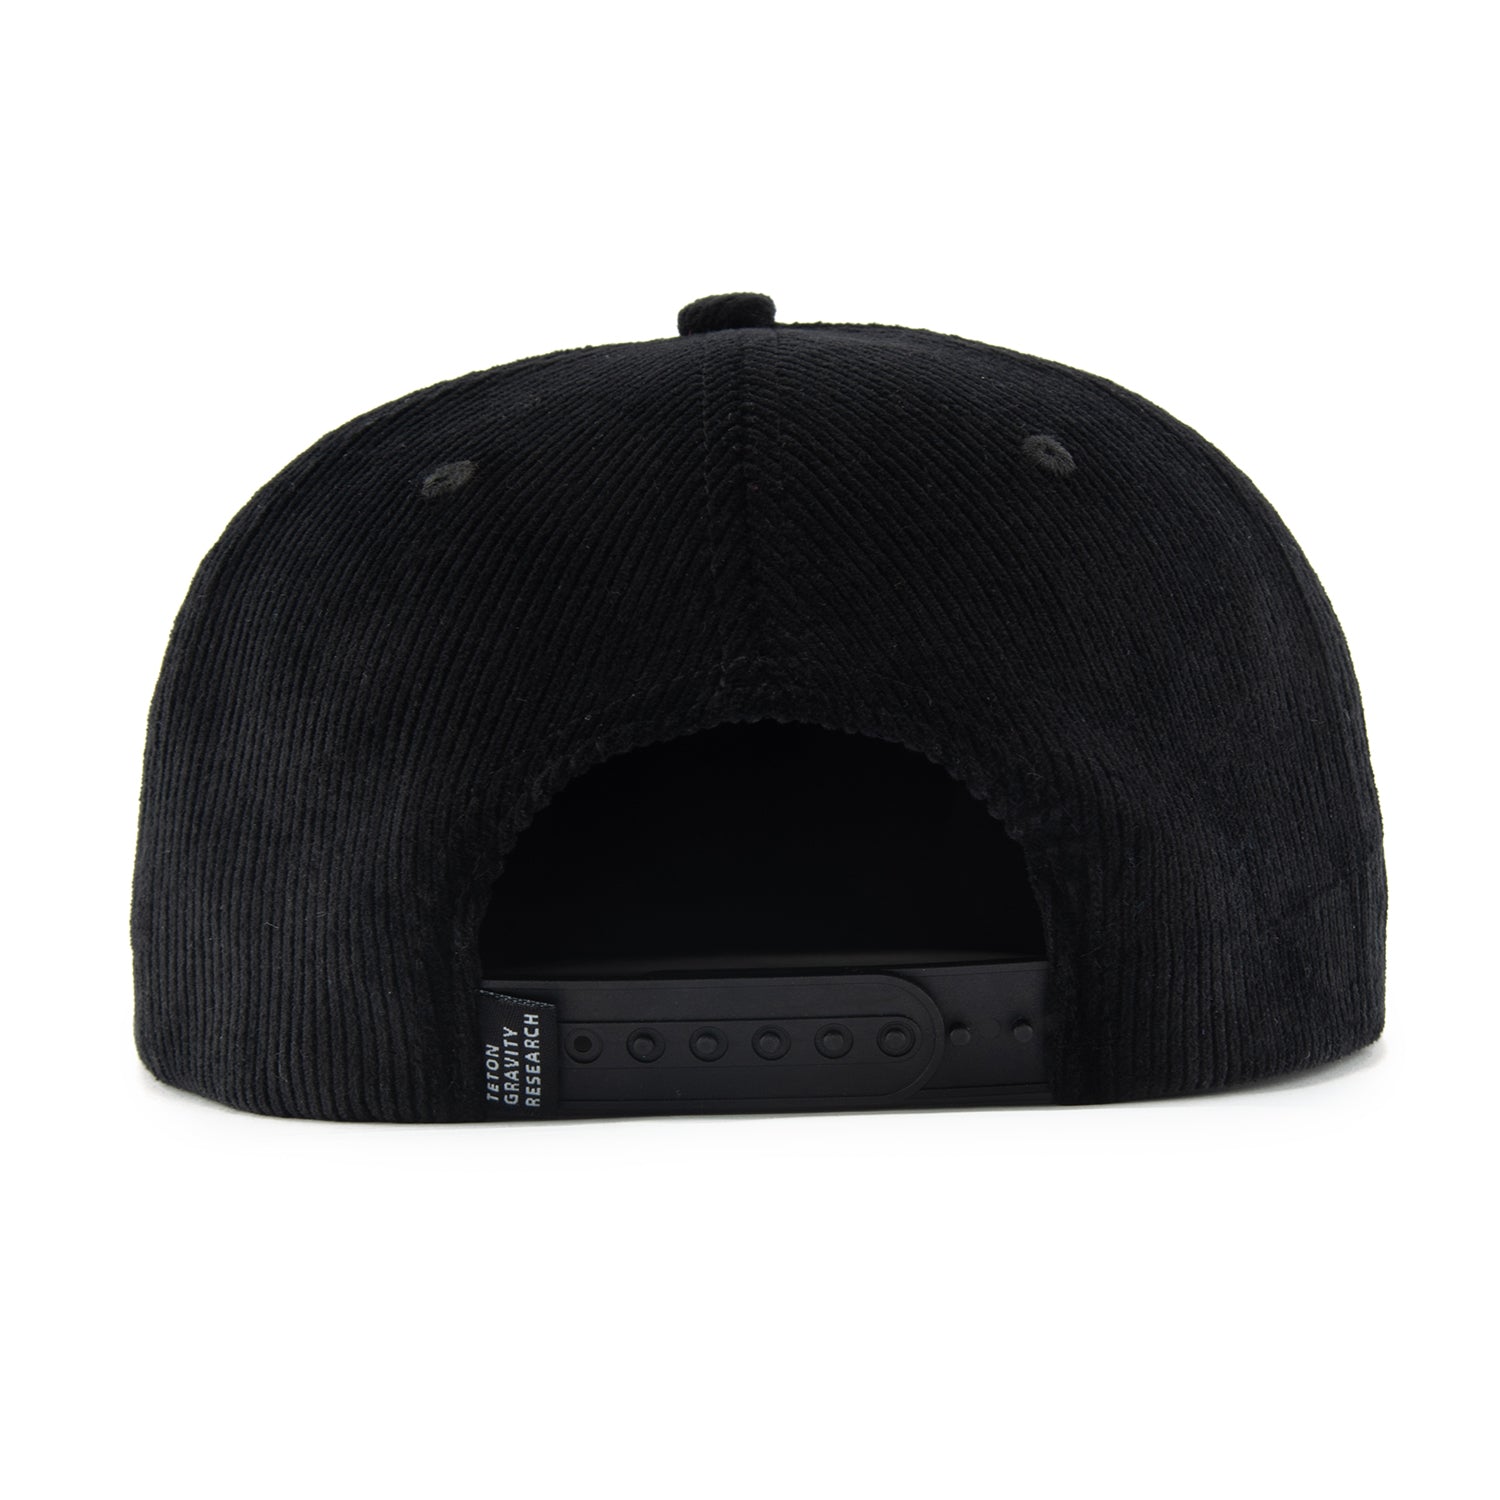 “Not Fade Away” Cord Snapback Hat by Yusuke Komori